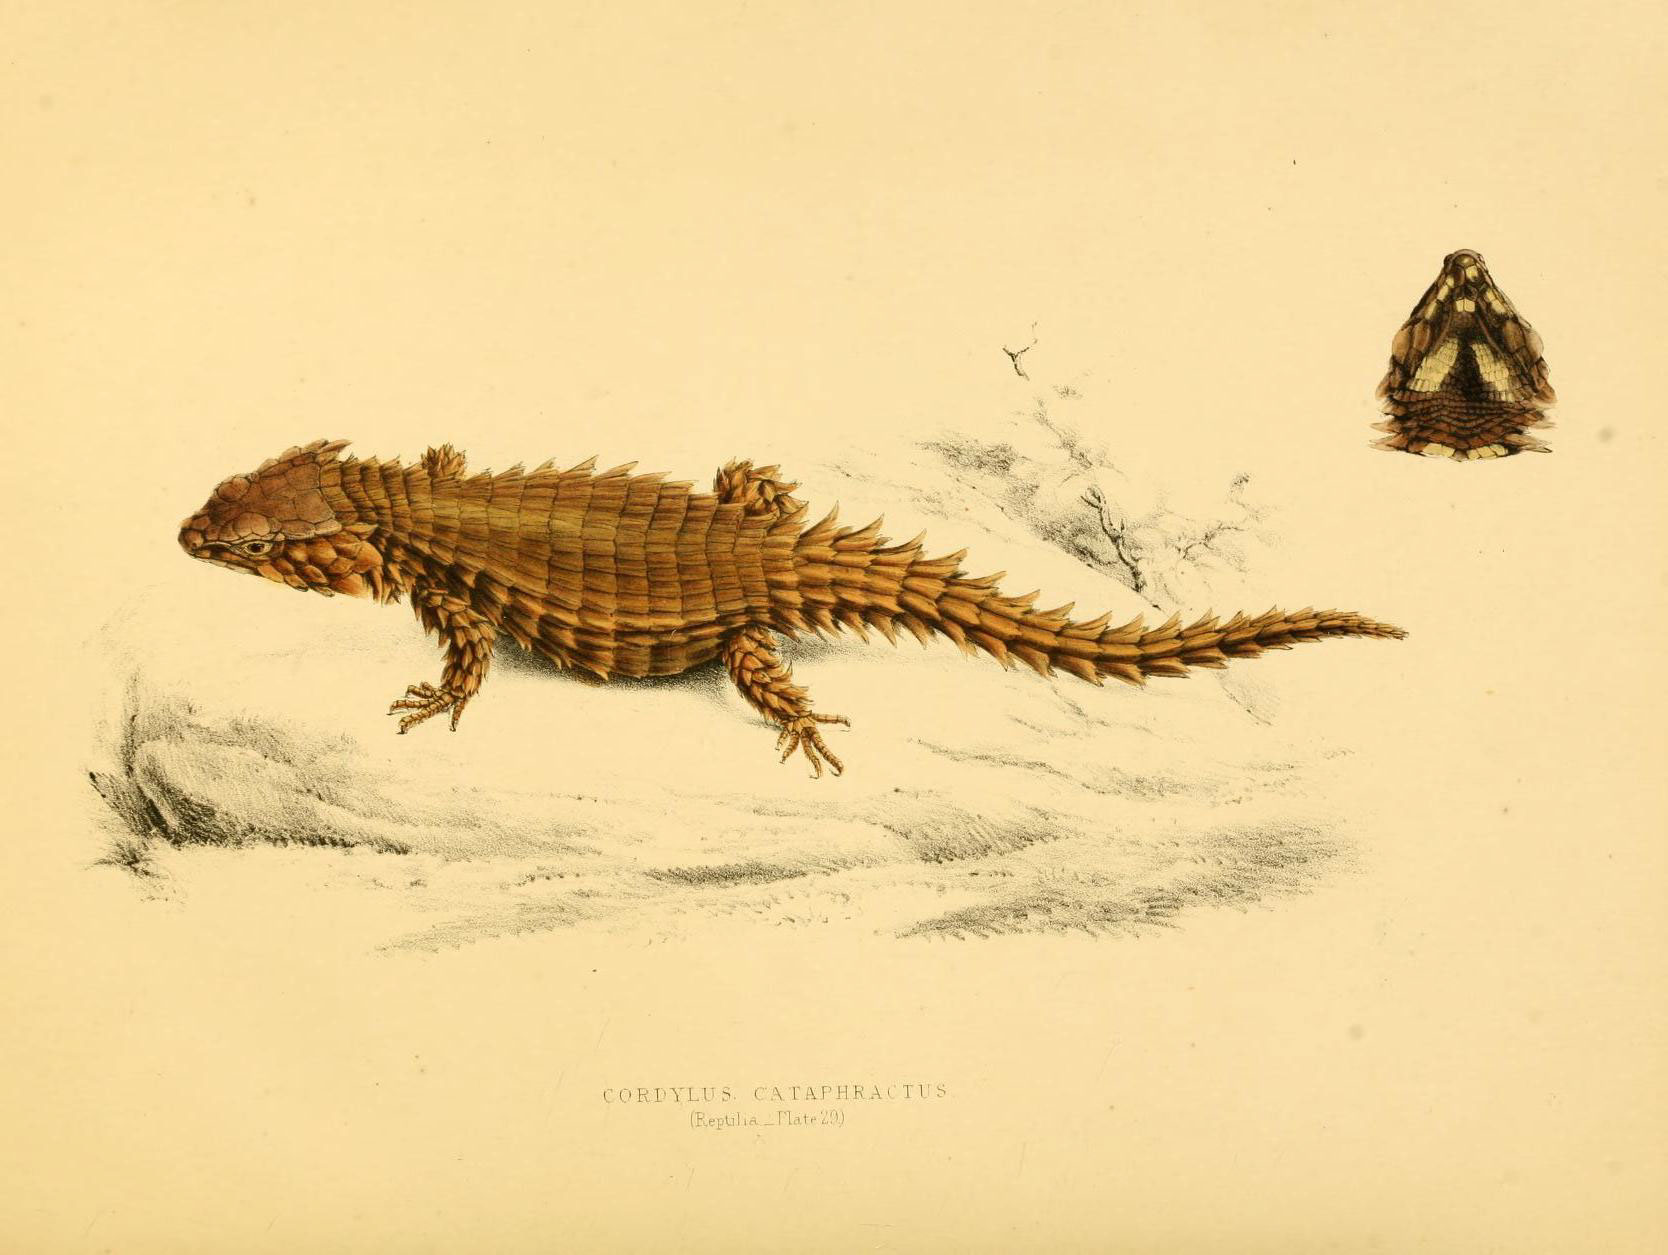 a sketch shows an orange lizard and a slug crawling on sand